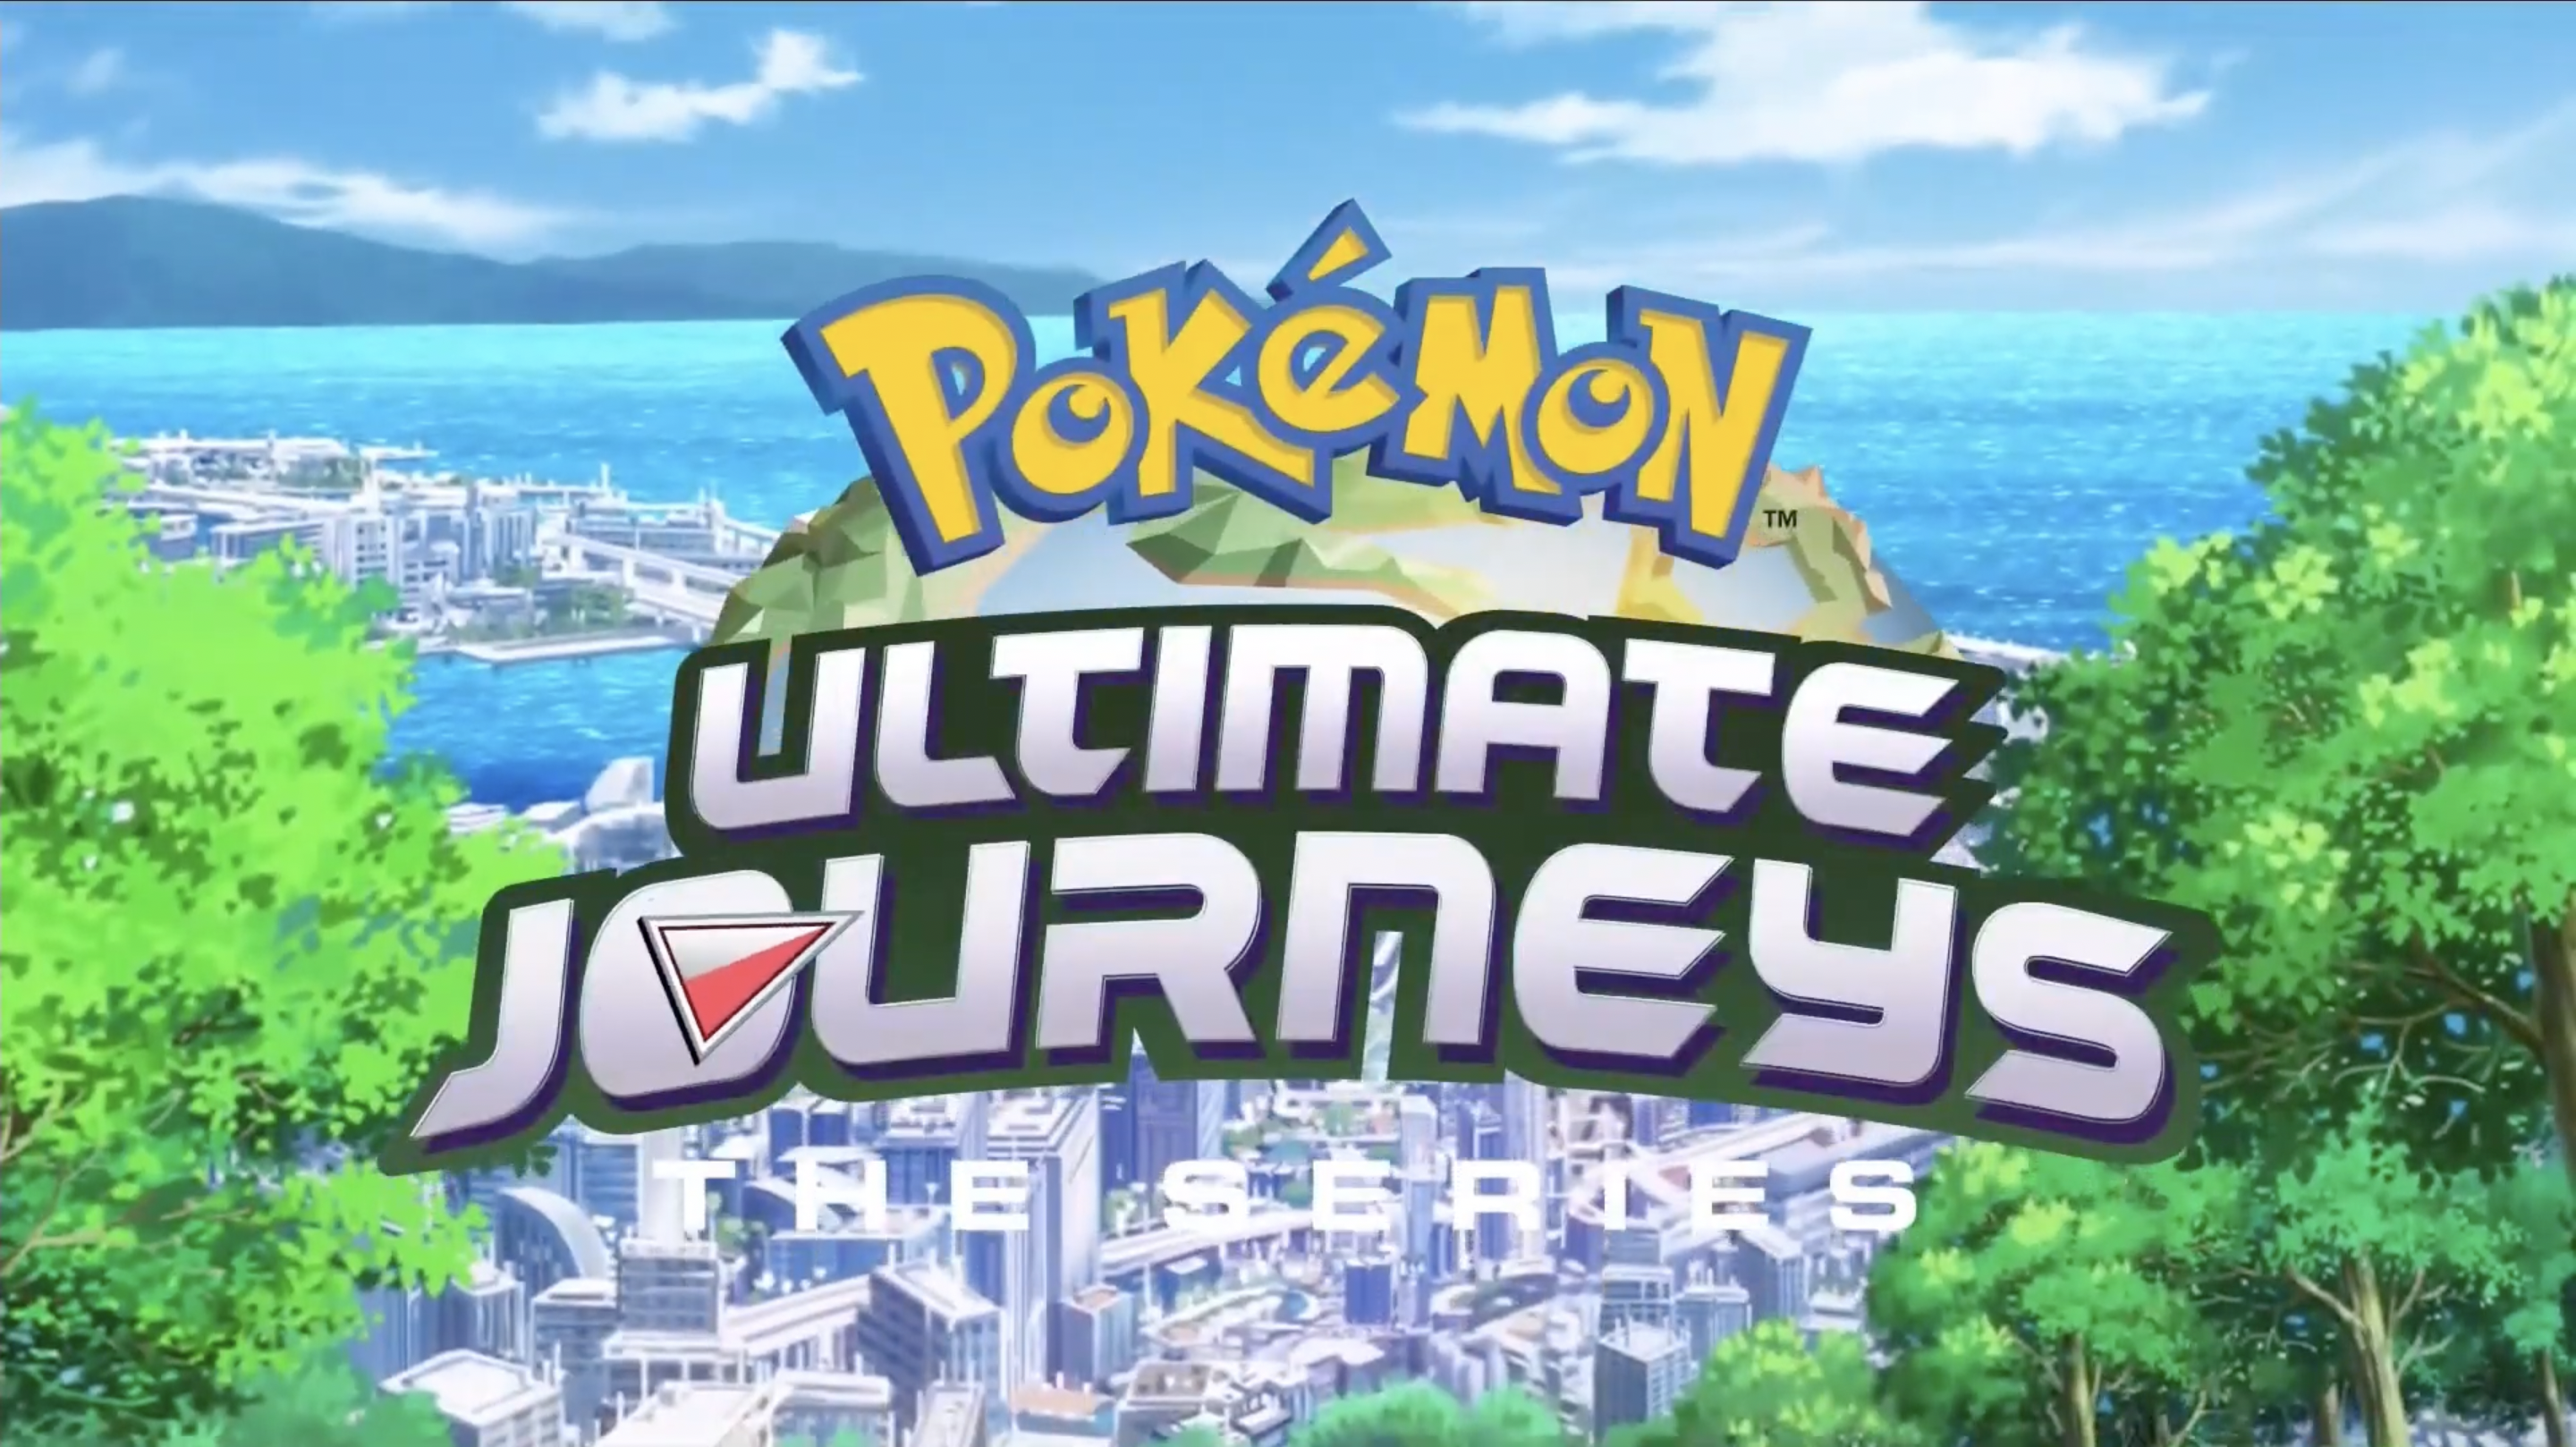 Pokémon Anime's 25th Season Pokémon Ultimate Journeys Premieres